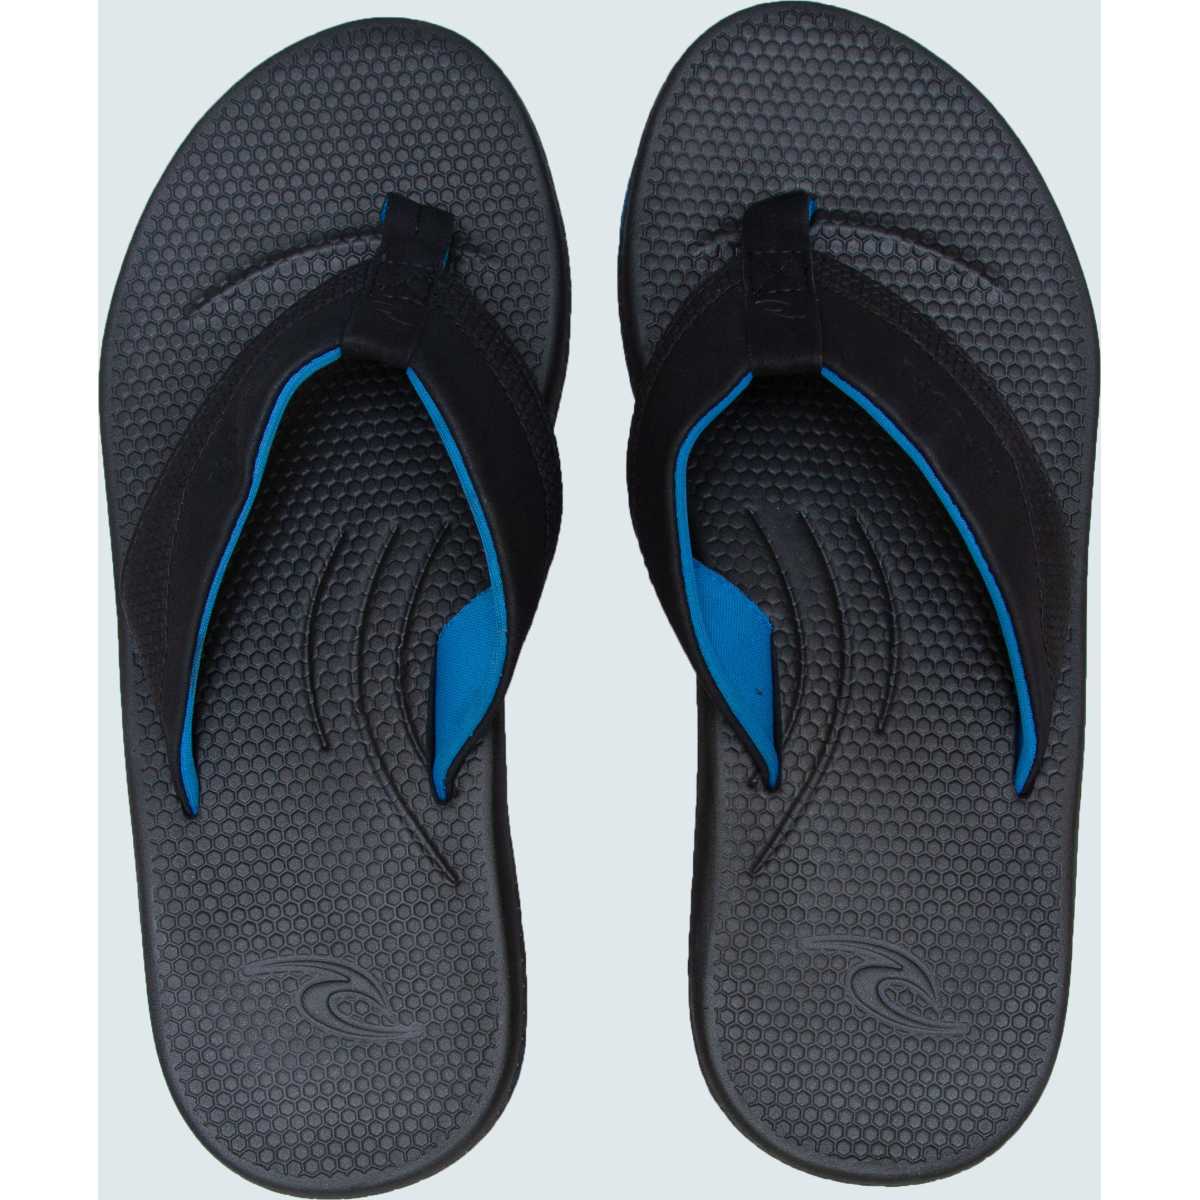 Sonar Sandals in Black/Blue